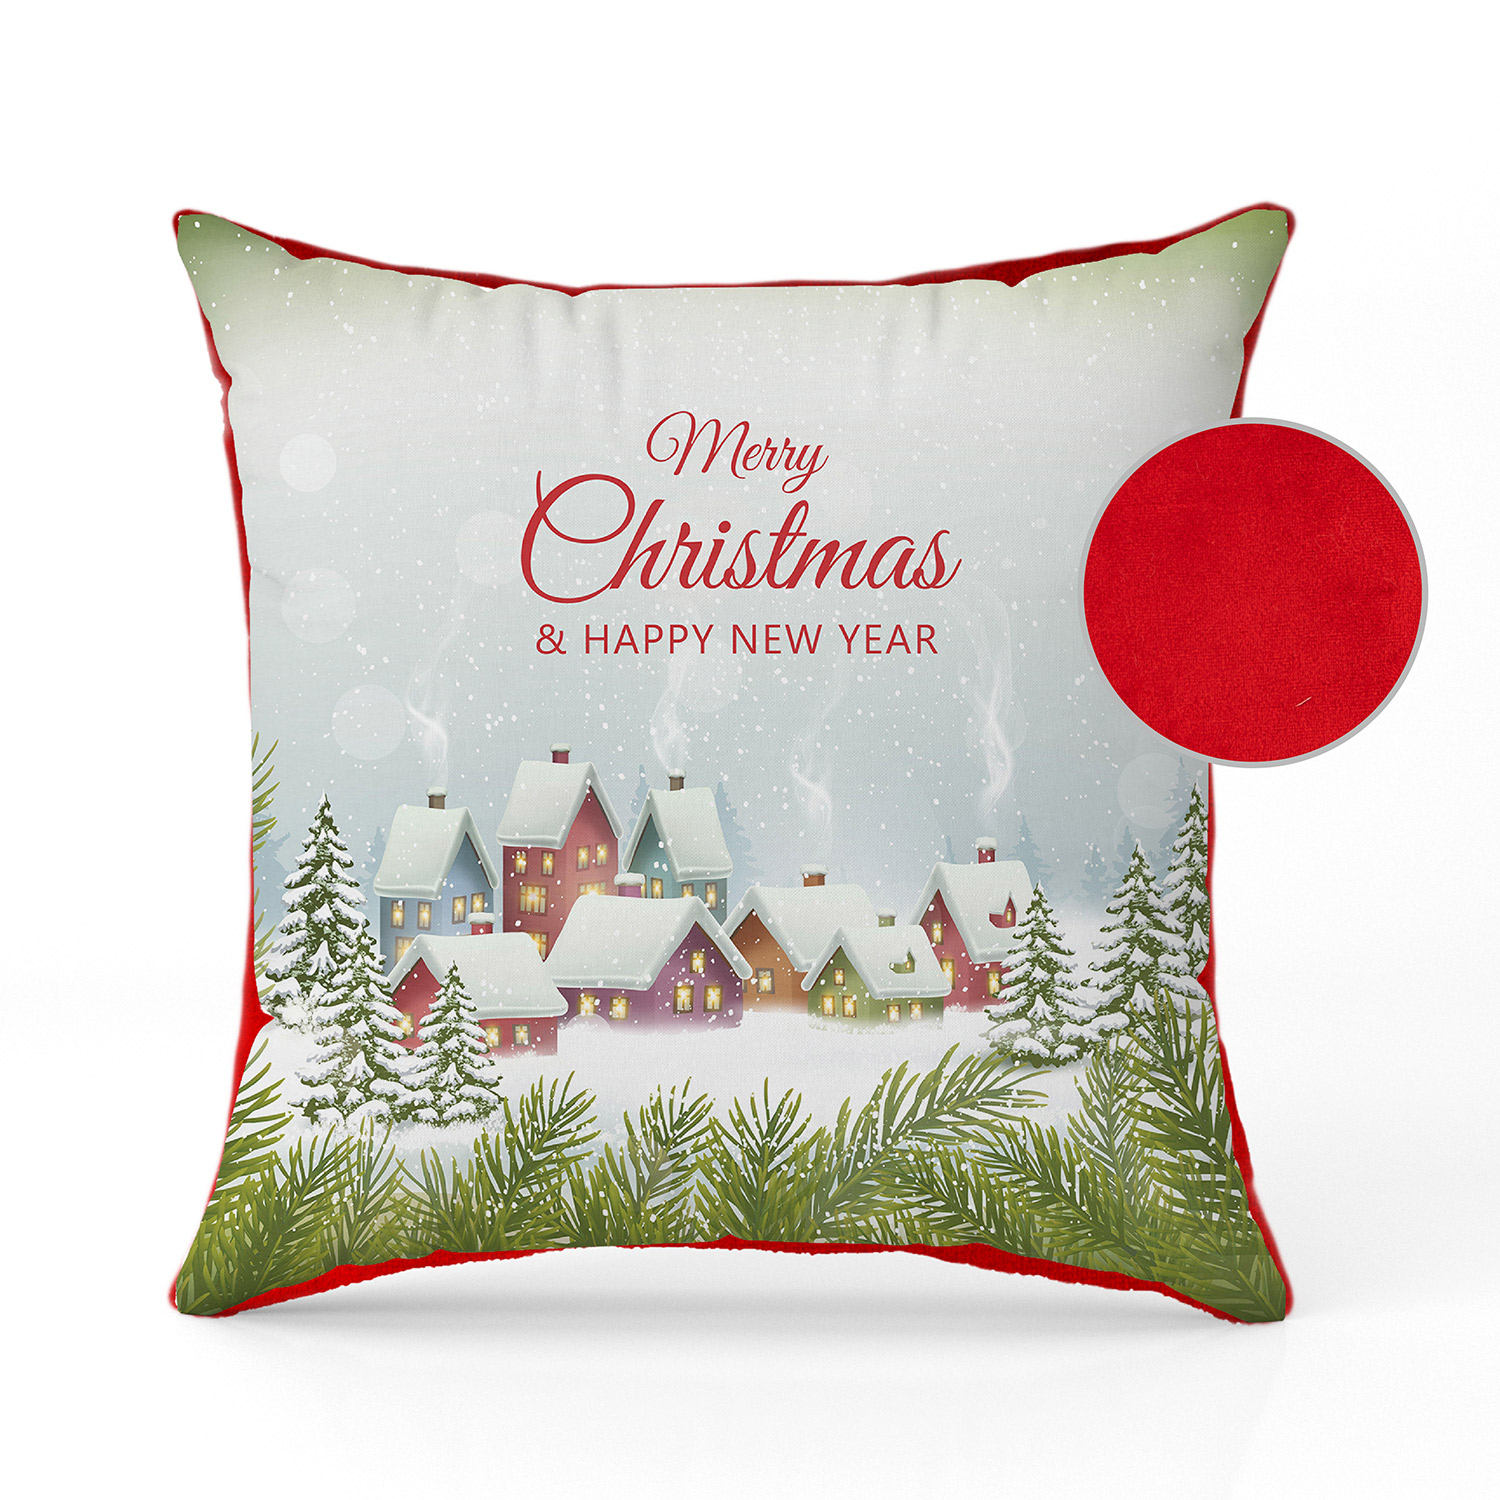 Christmas pillow with houses